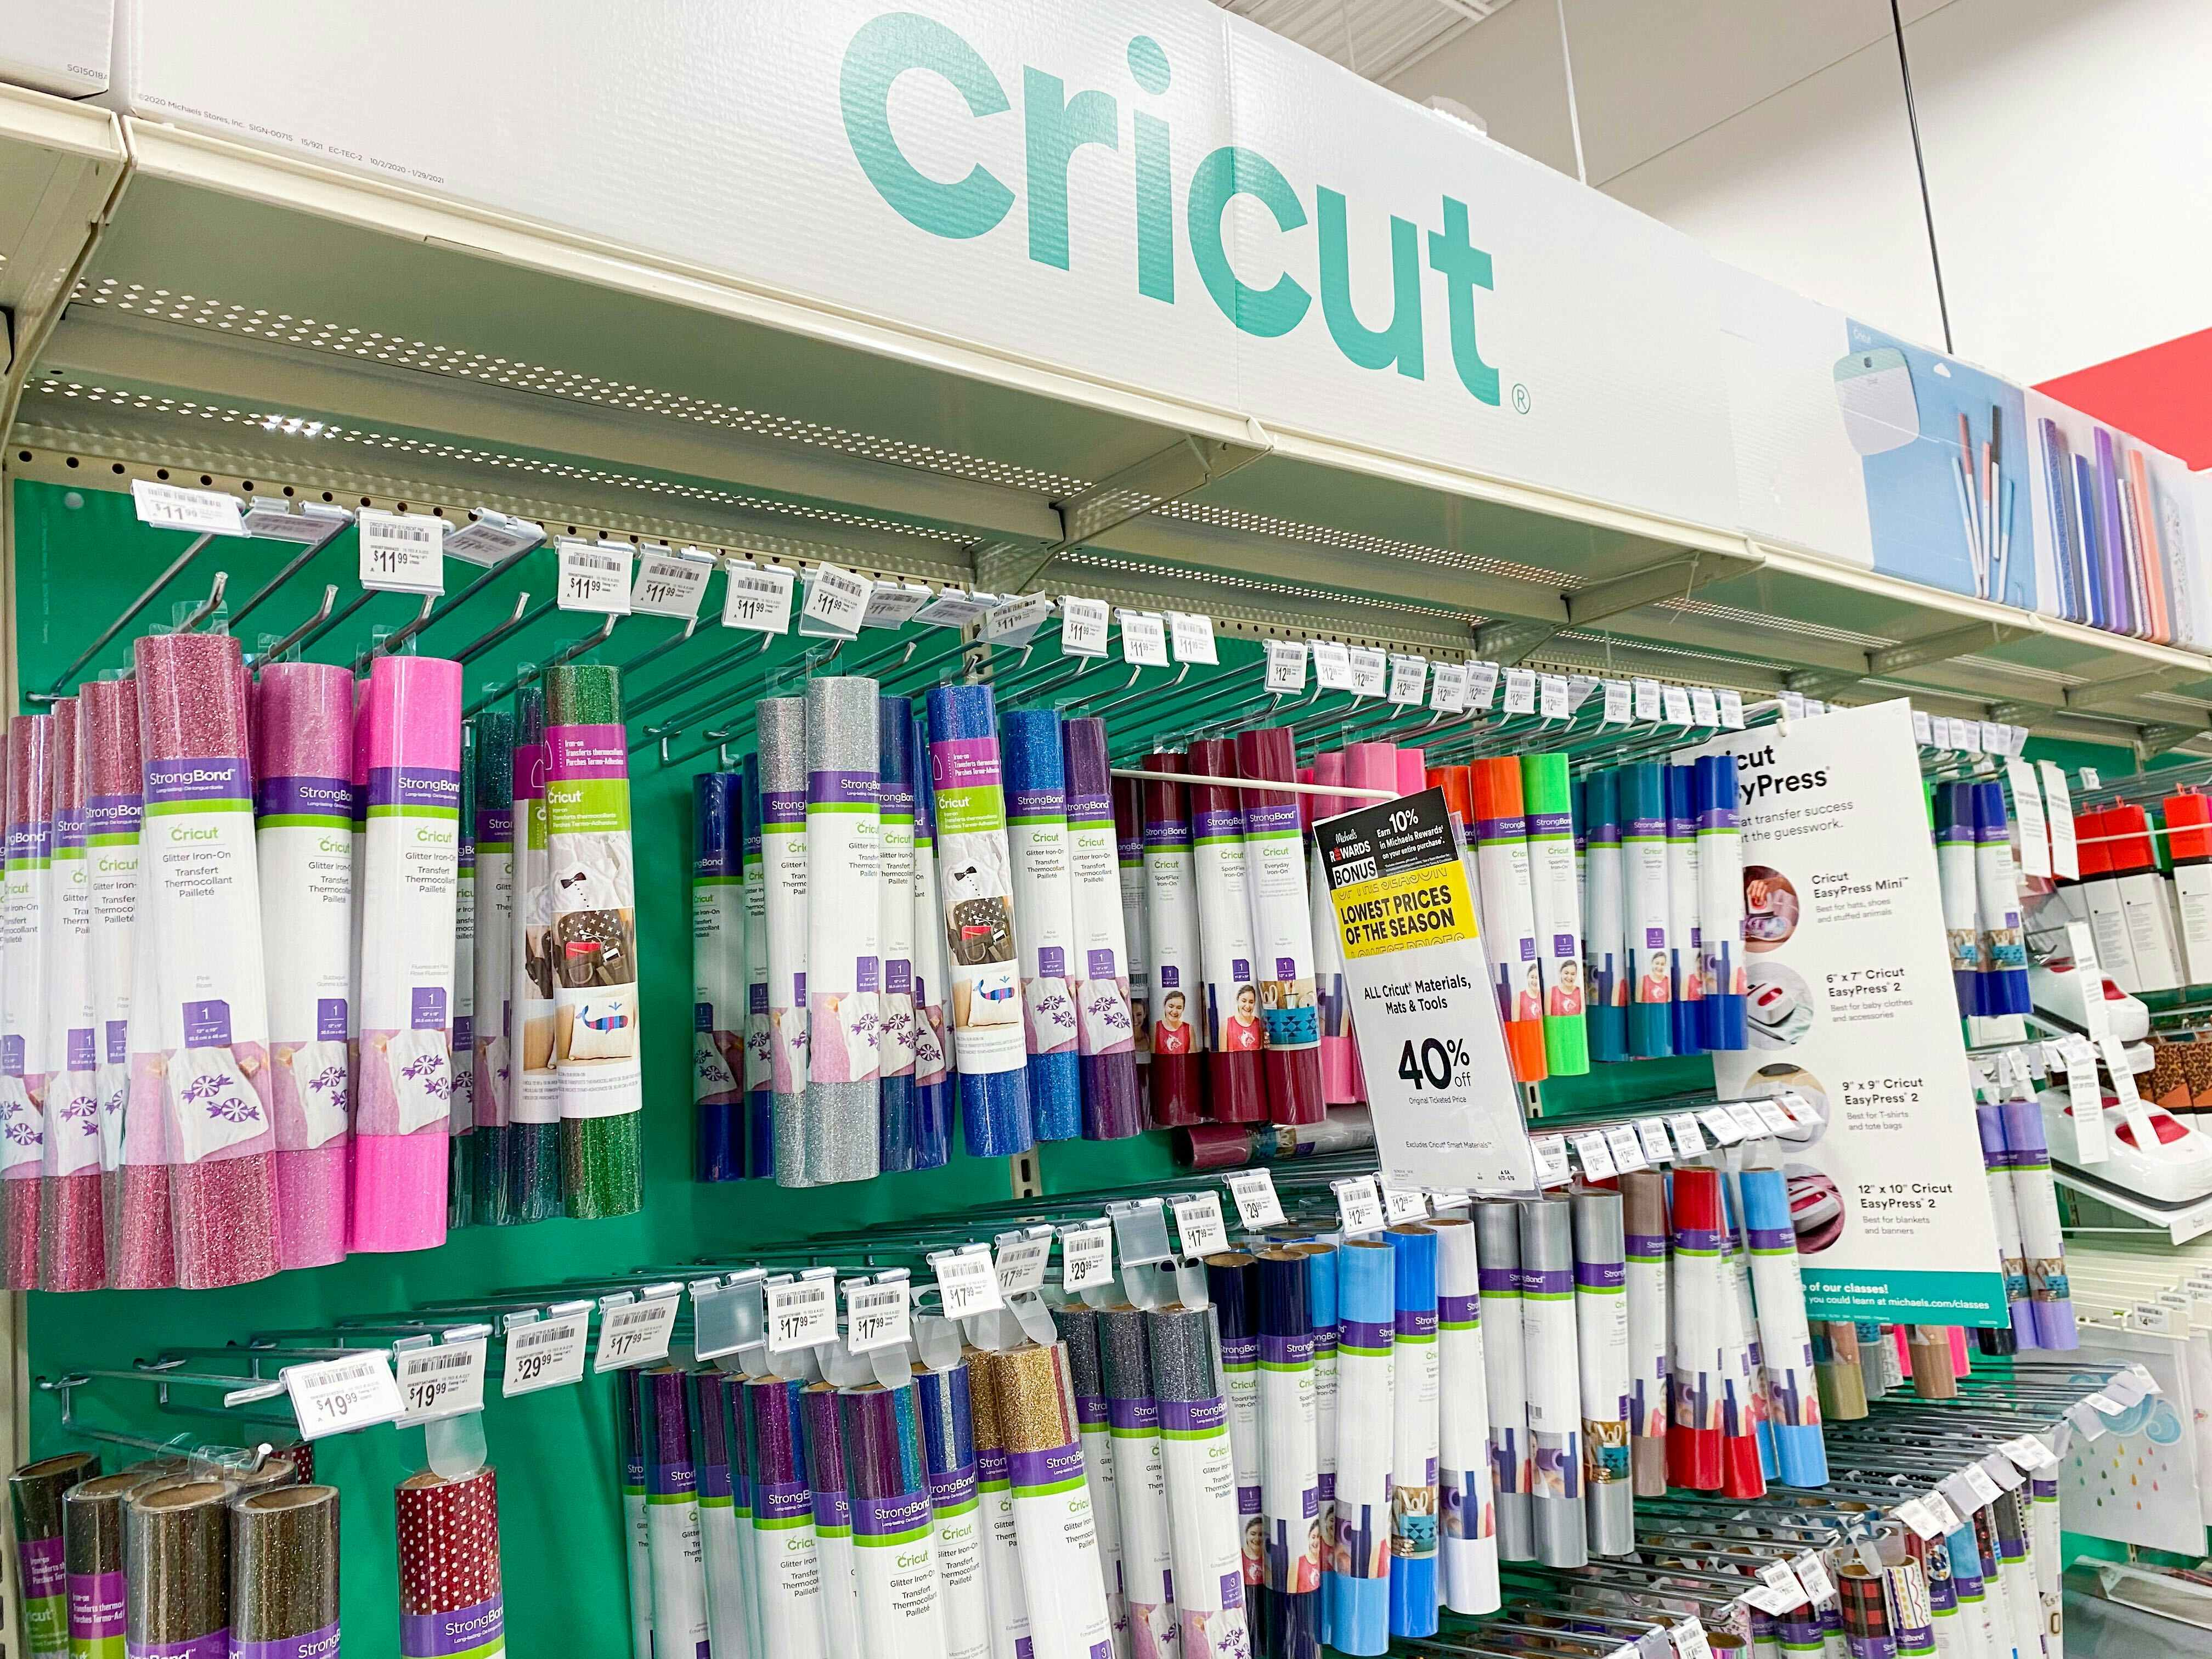 Shop Discount Cricut Supplies and Accessories Online!